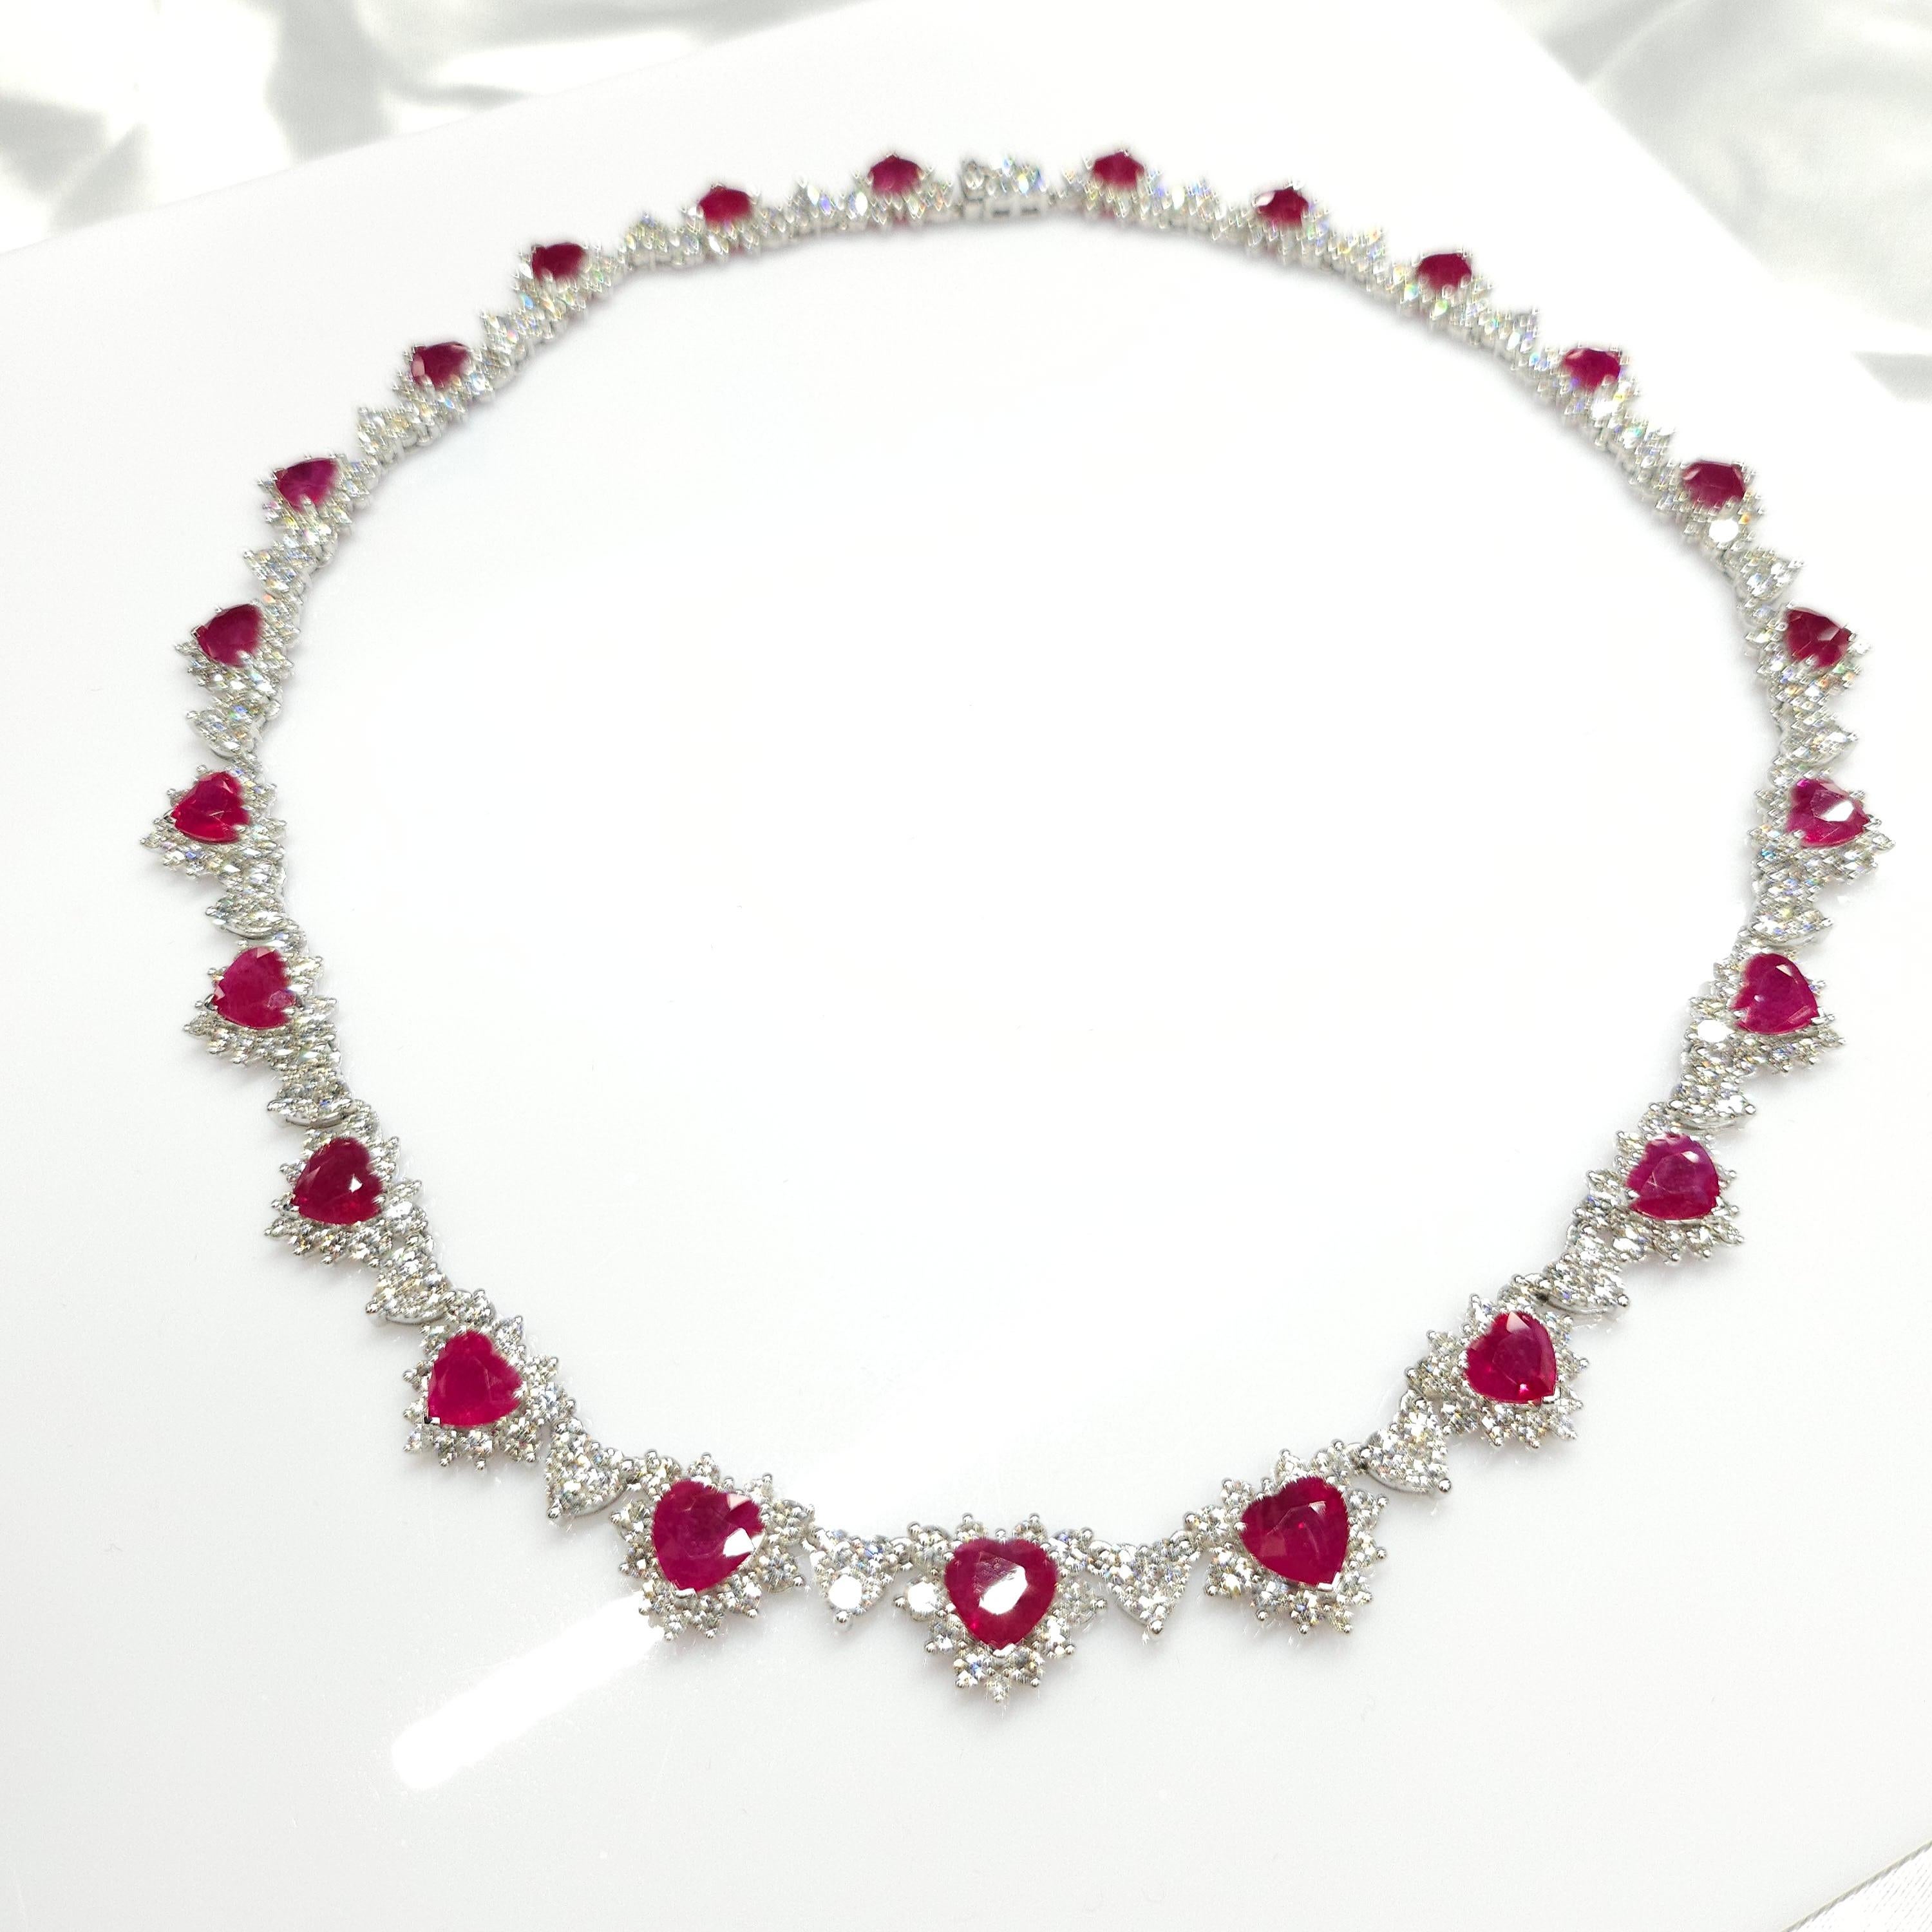 IGI Certified 26.58 Carat Burma Ruby & 18.85 Carat Diamond Necklace in 18K Gold For Sale 2